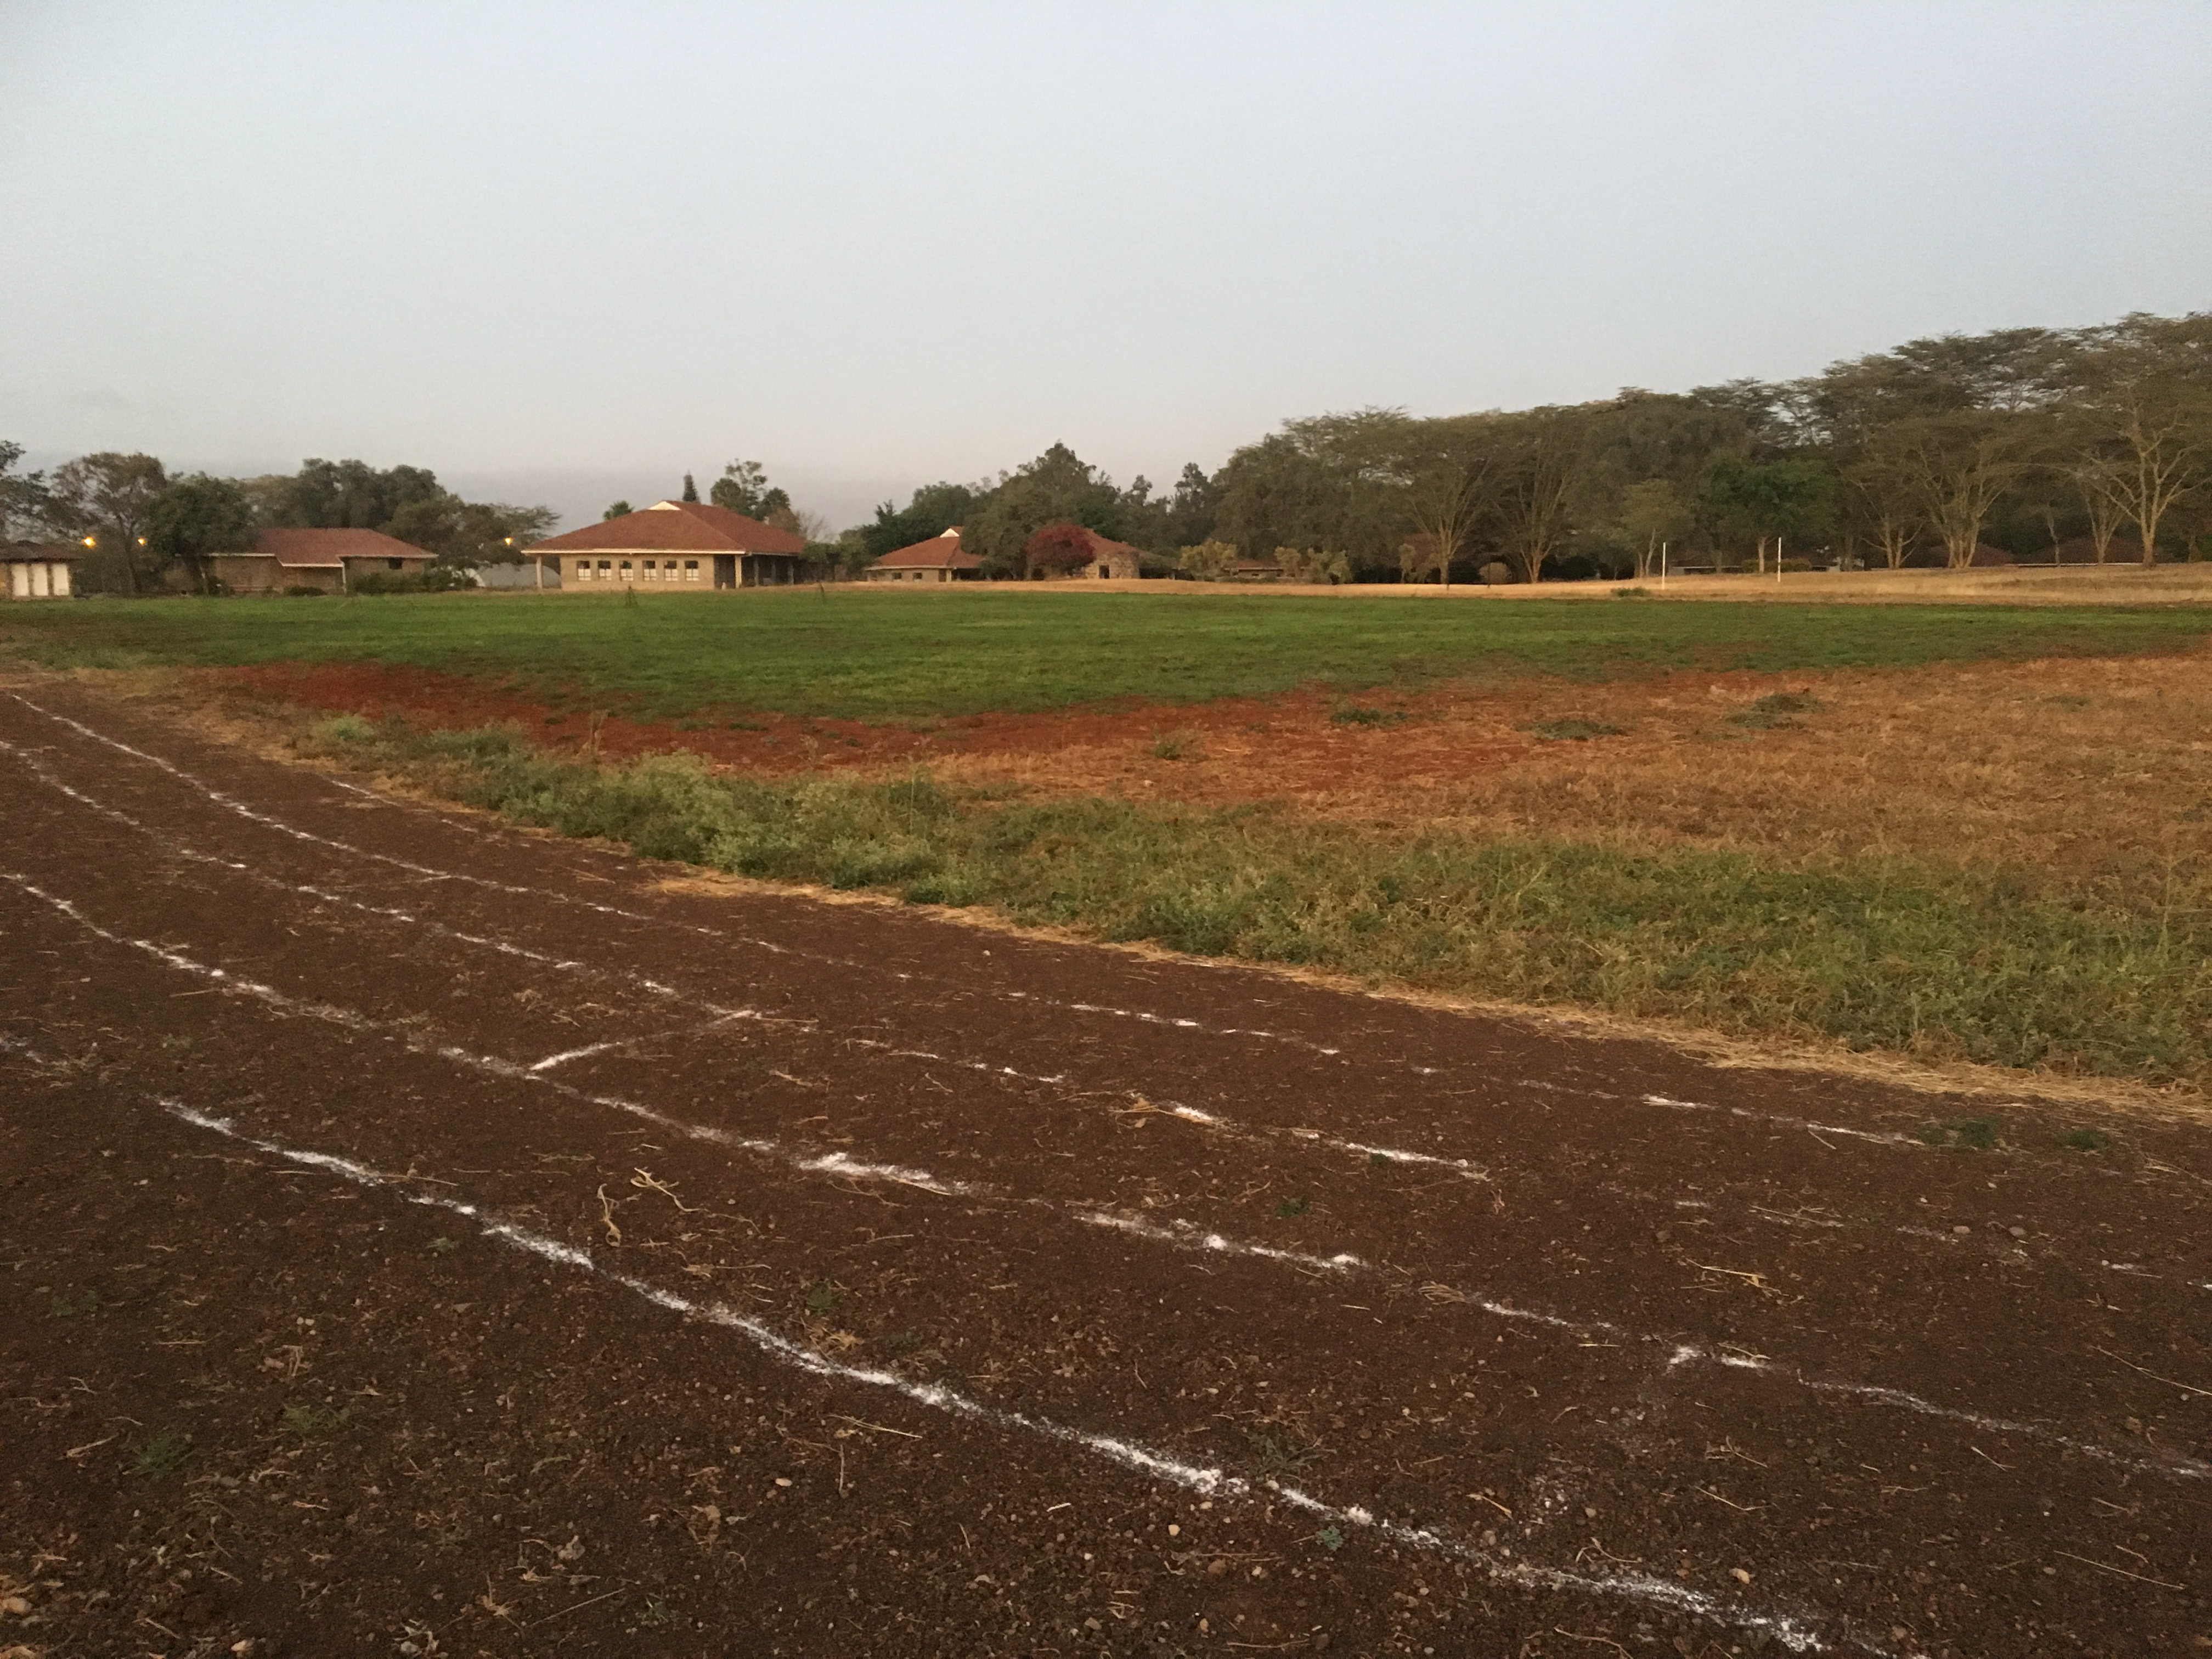 Soccer is a popular sport at the Rafiki Village Kenya